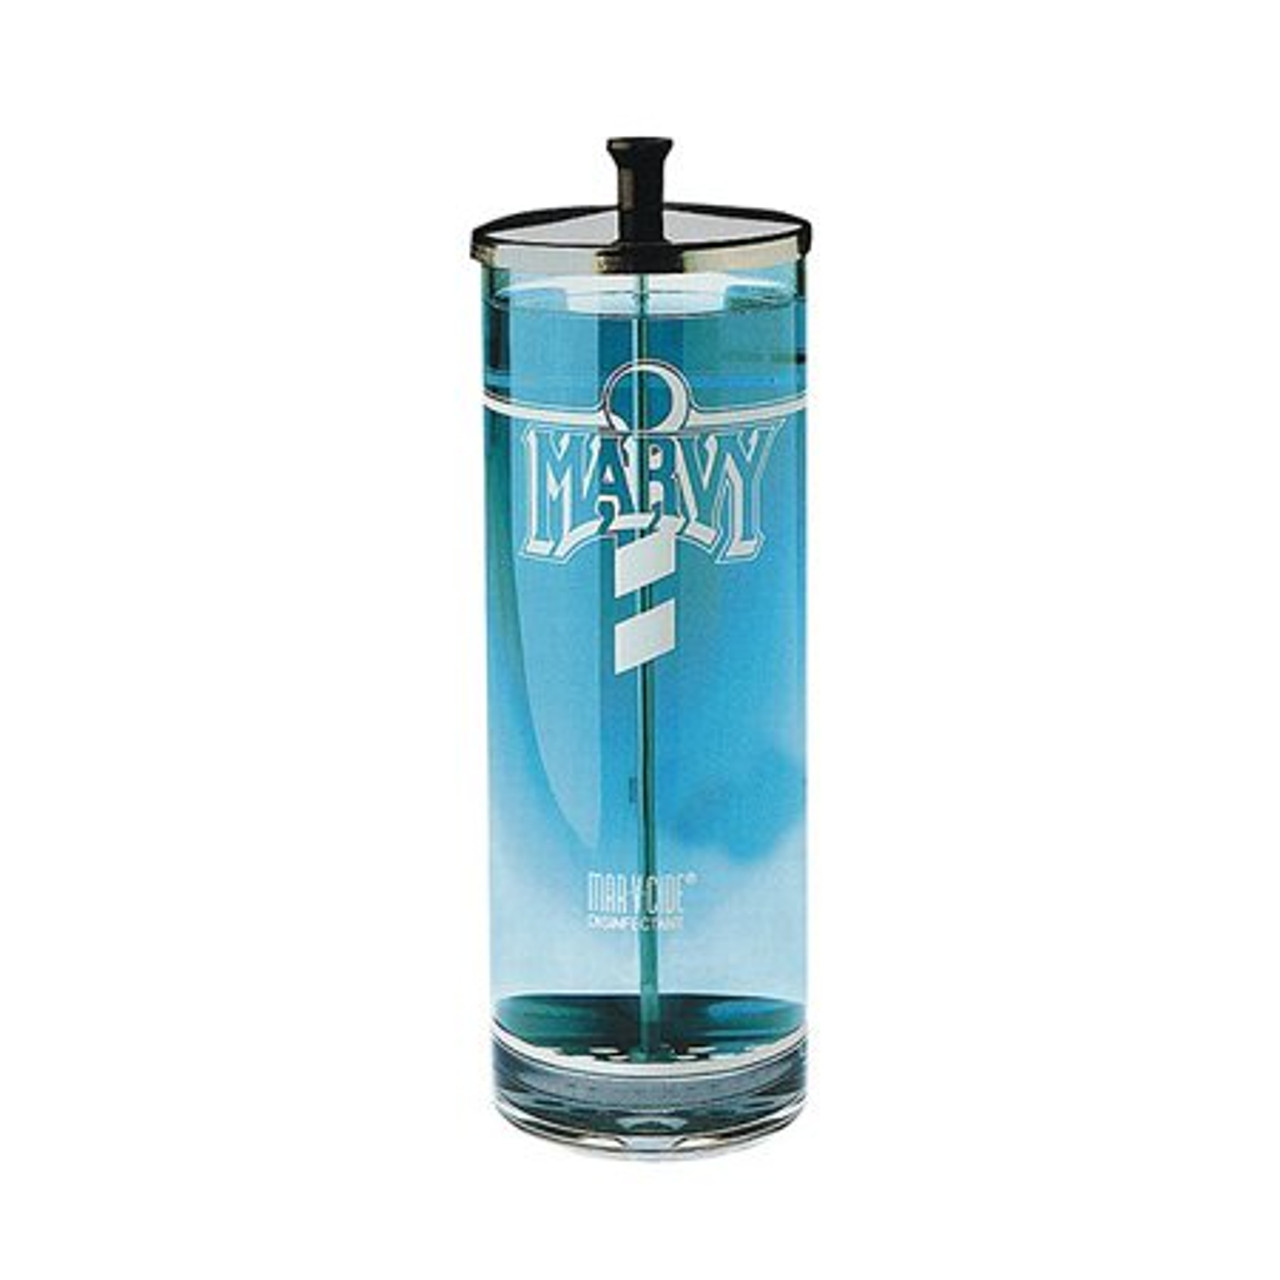 Marvy Sanitizing Jar #7